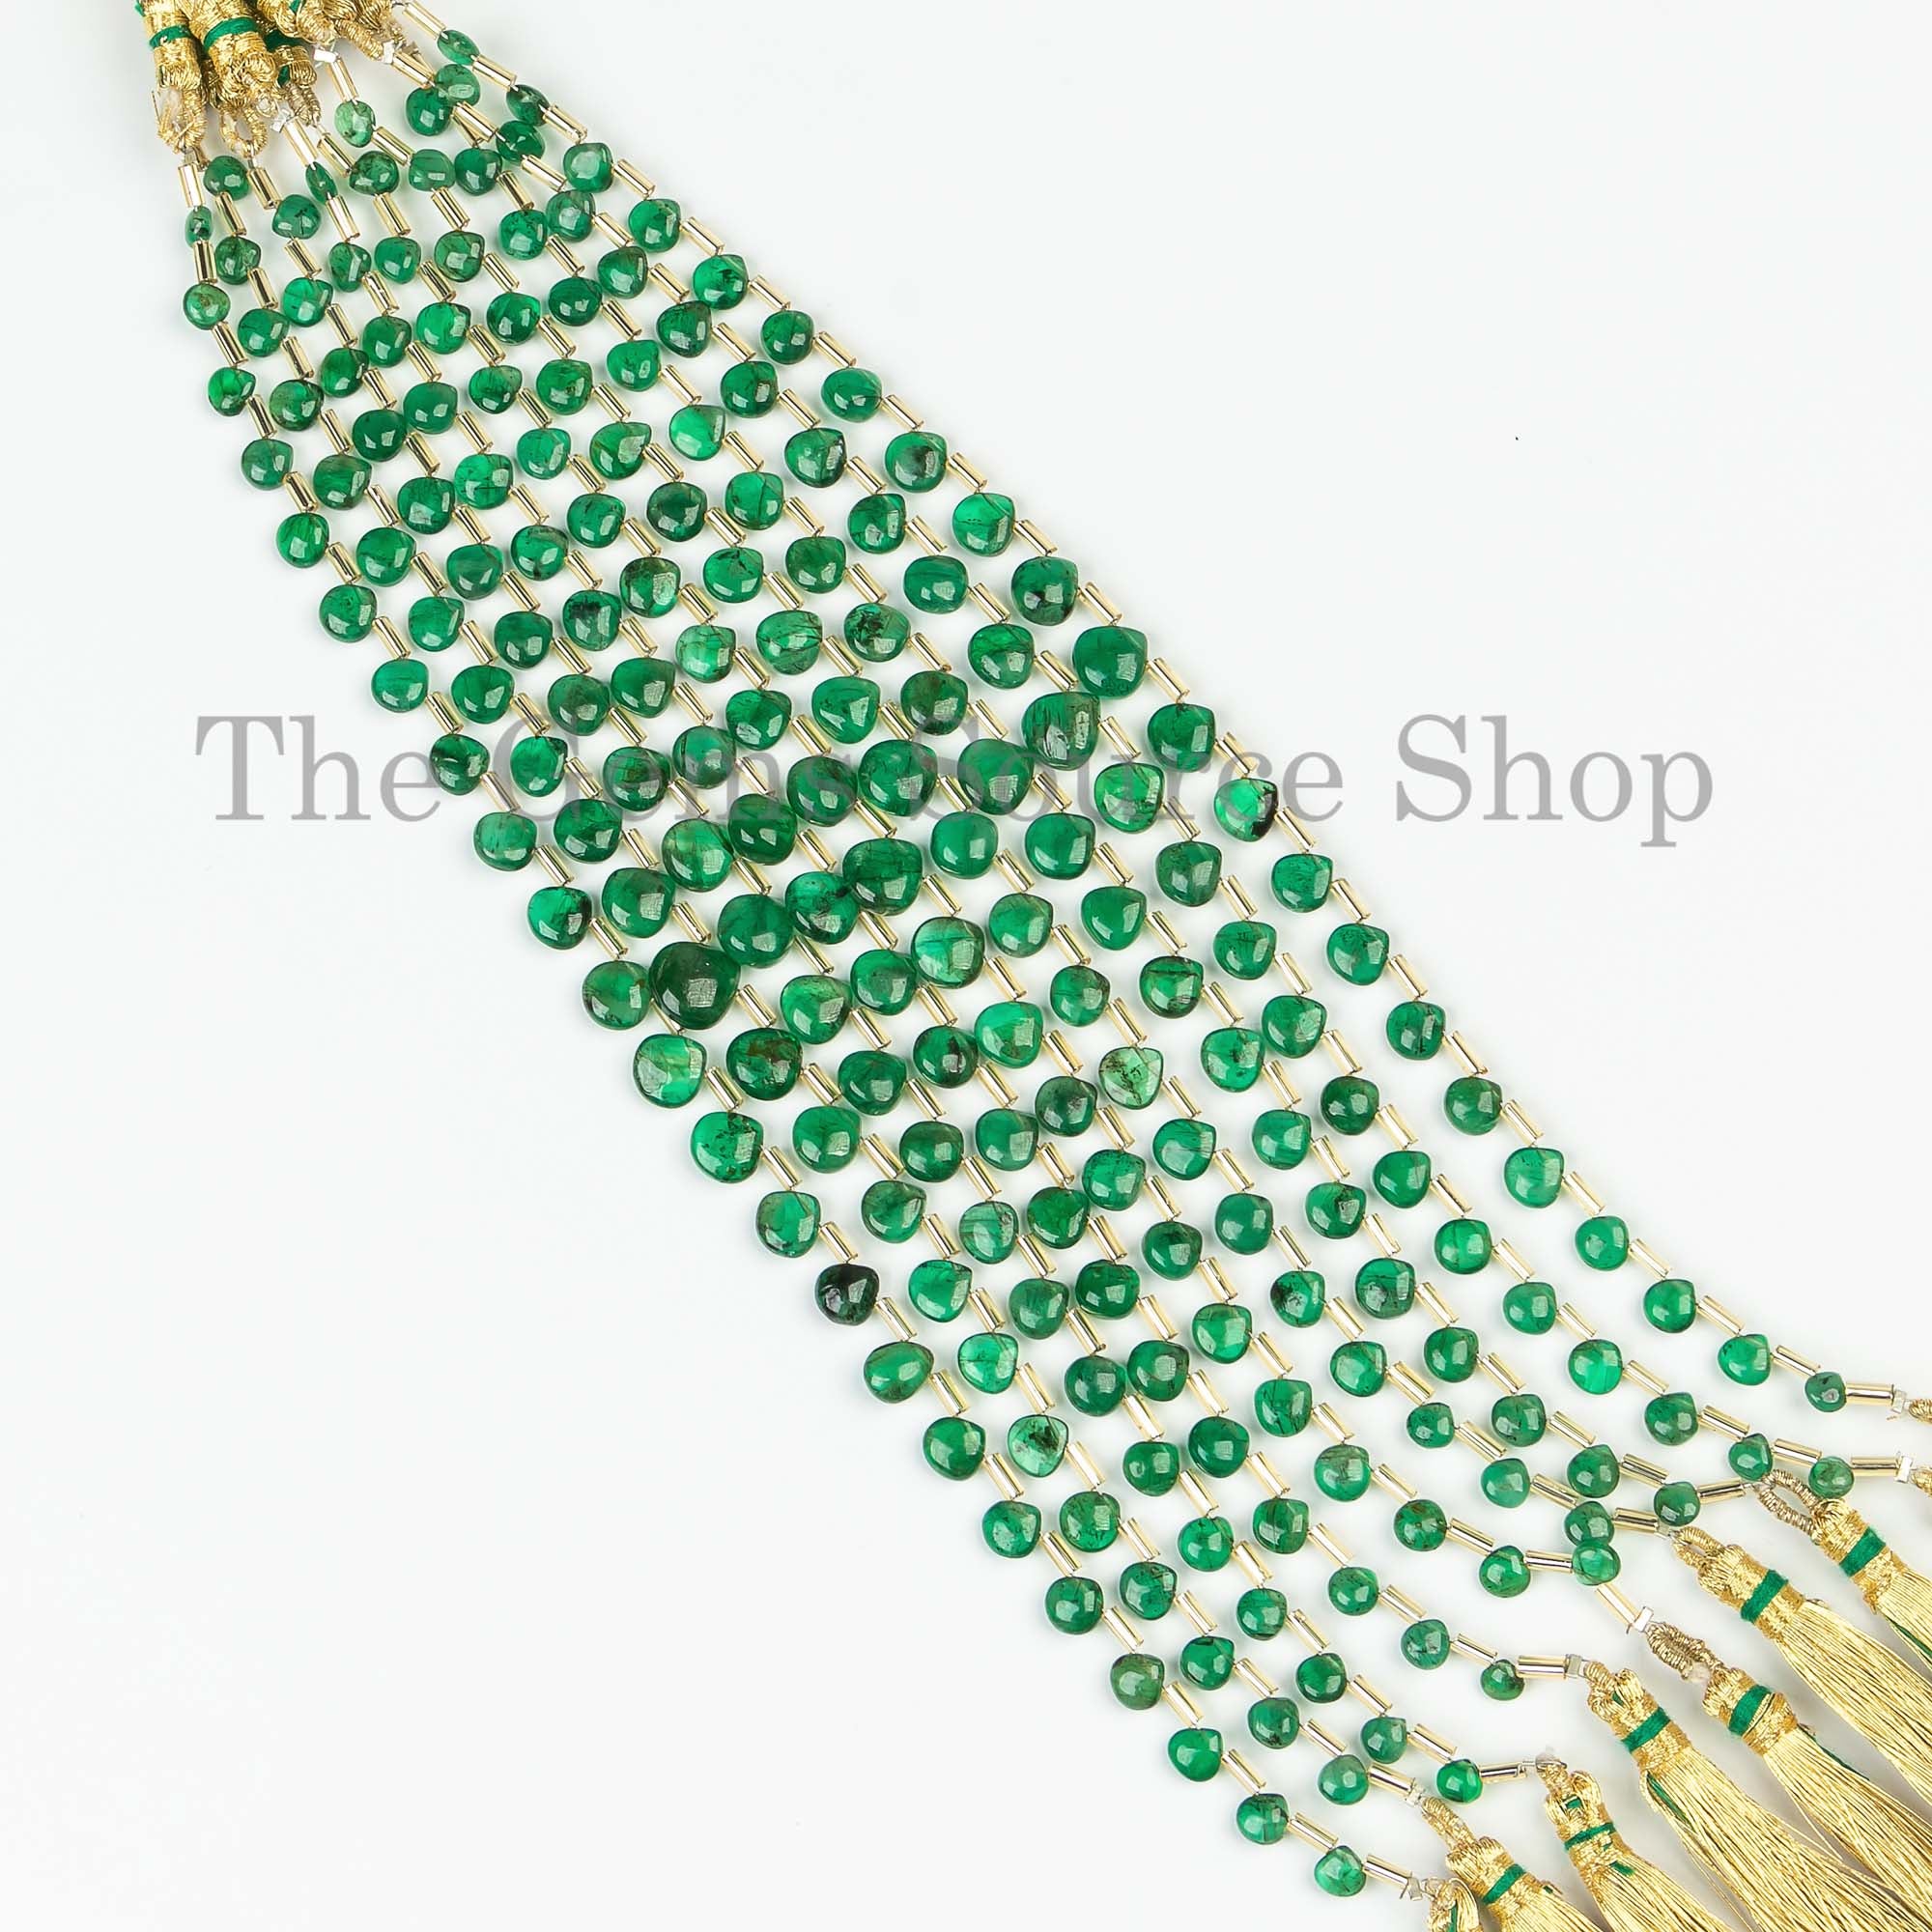 Emerald 5-8mm Smooth Plain Heart Beads, Emerald Beads, Emerald Heart Beads, Gemstone Beads